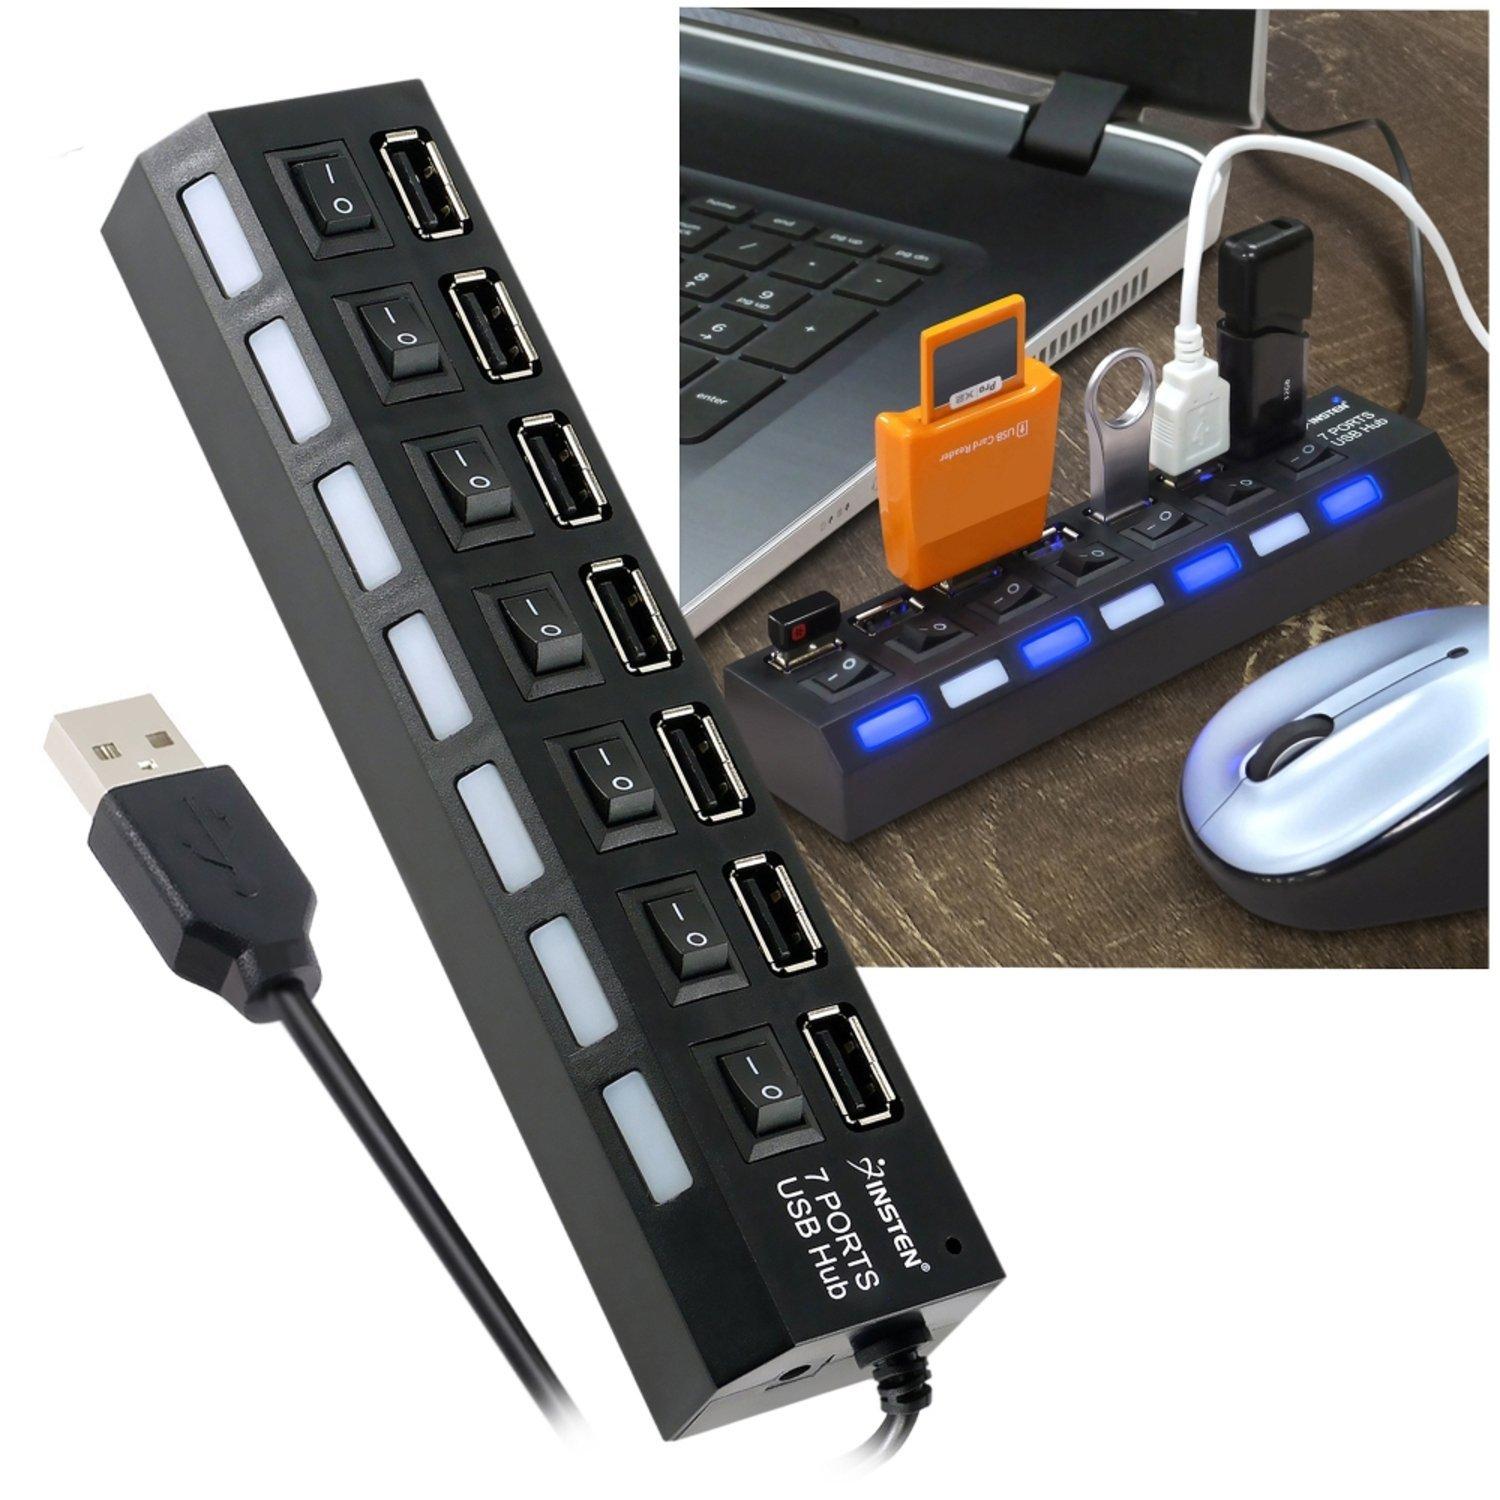 High Speed USB 2.0 Hub 7 Port ช่องต่อ USB 2.0 แบบ 7 ช่อง (สีดำ)